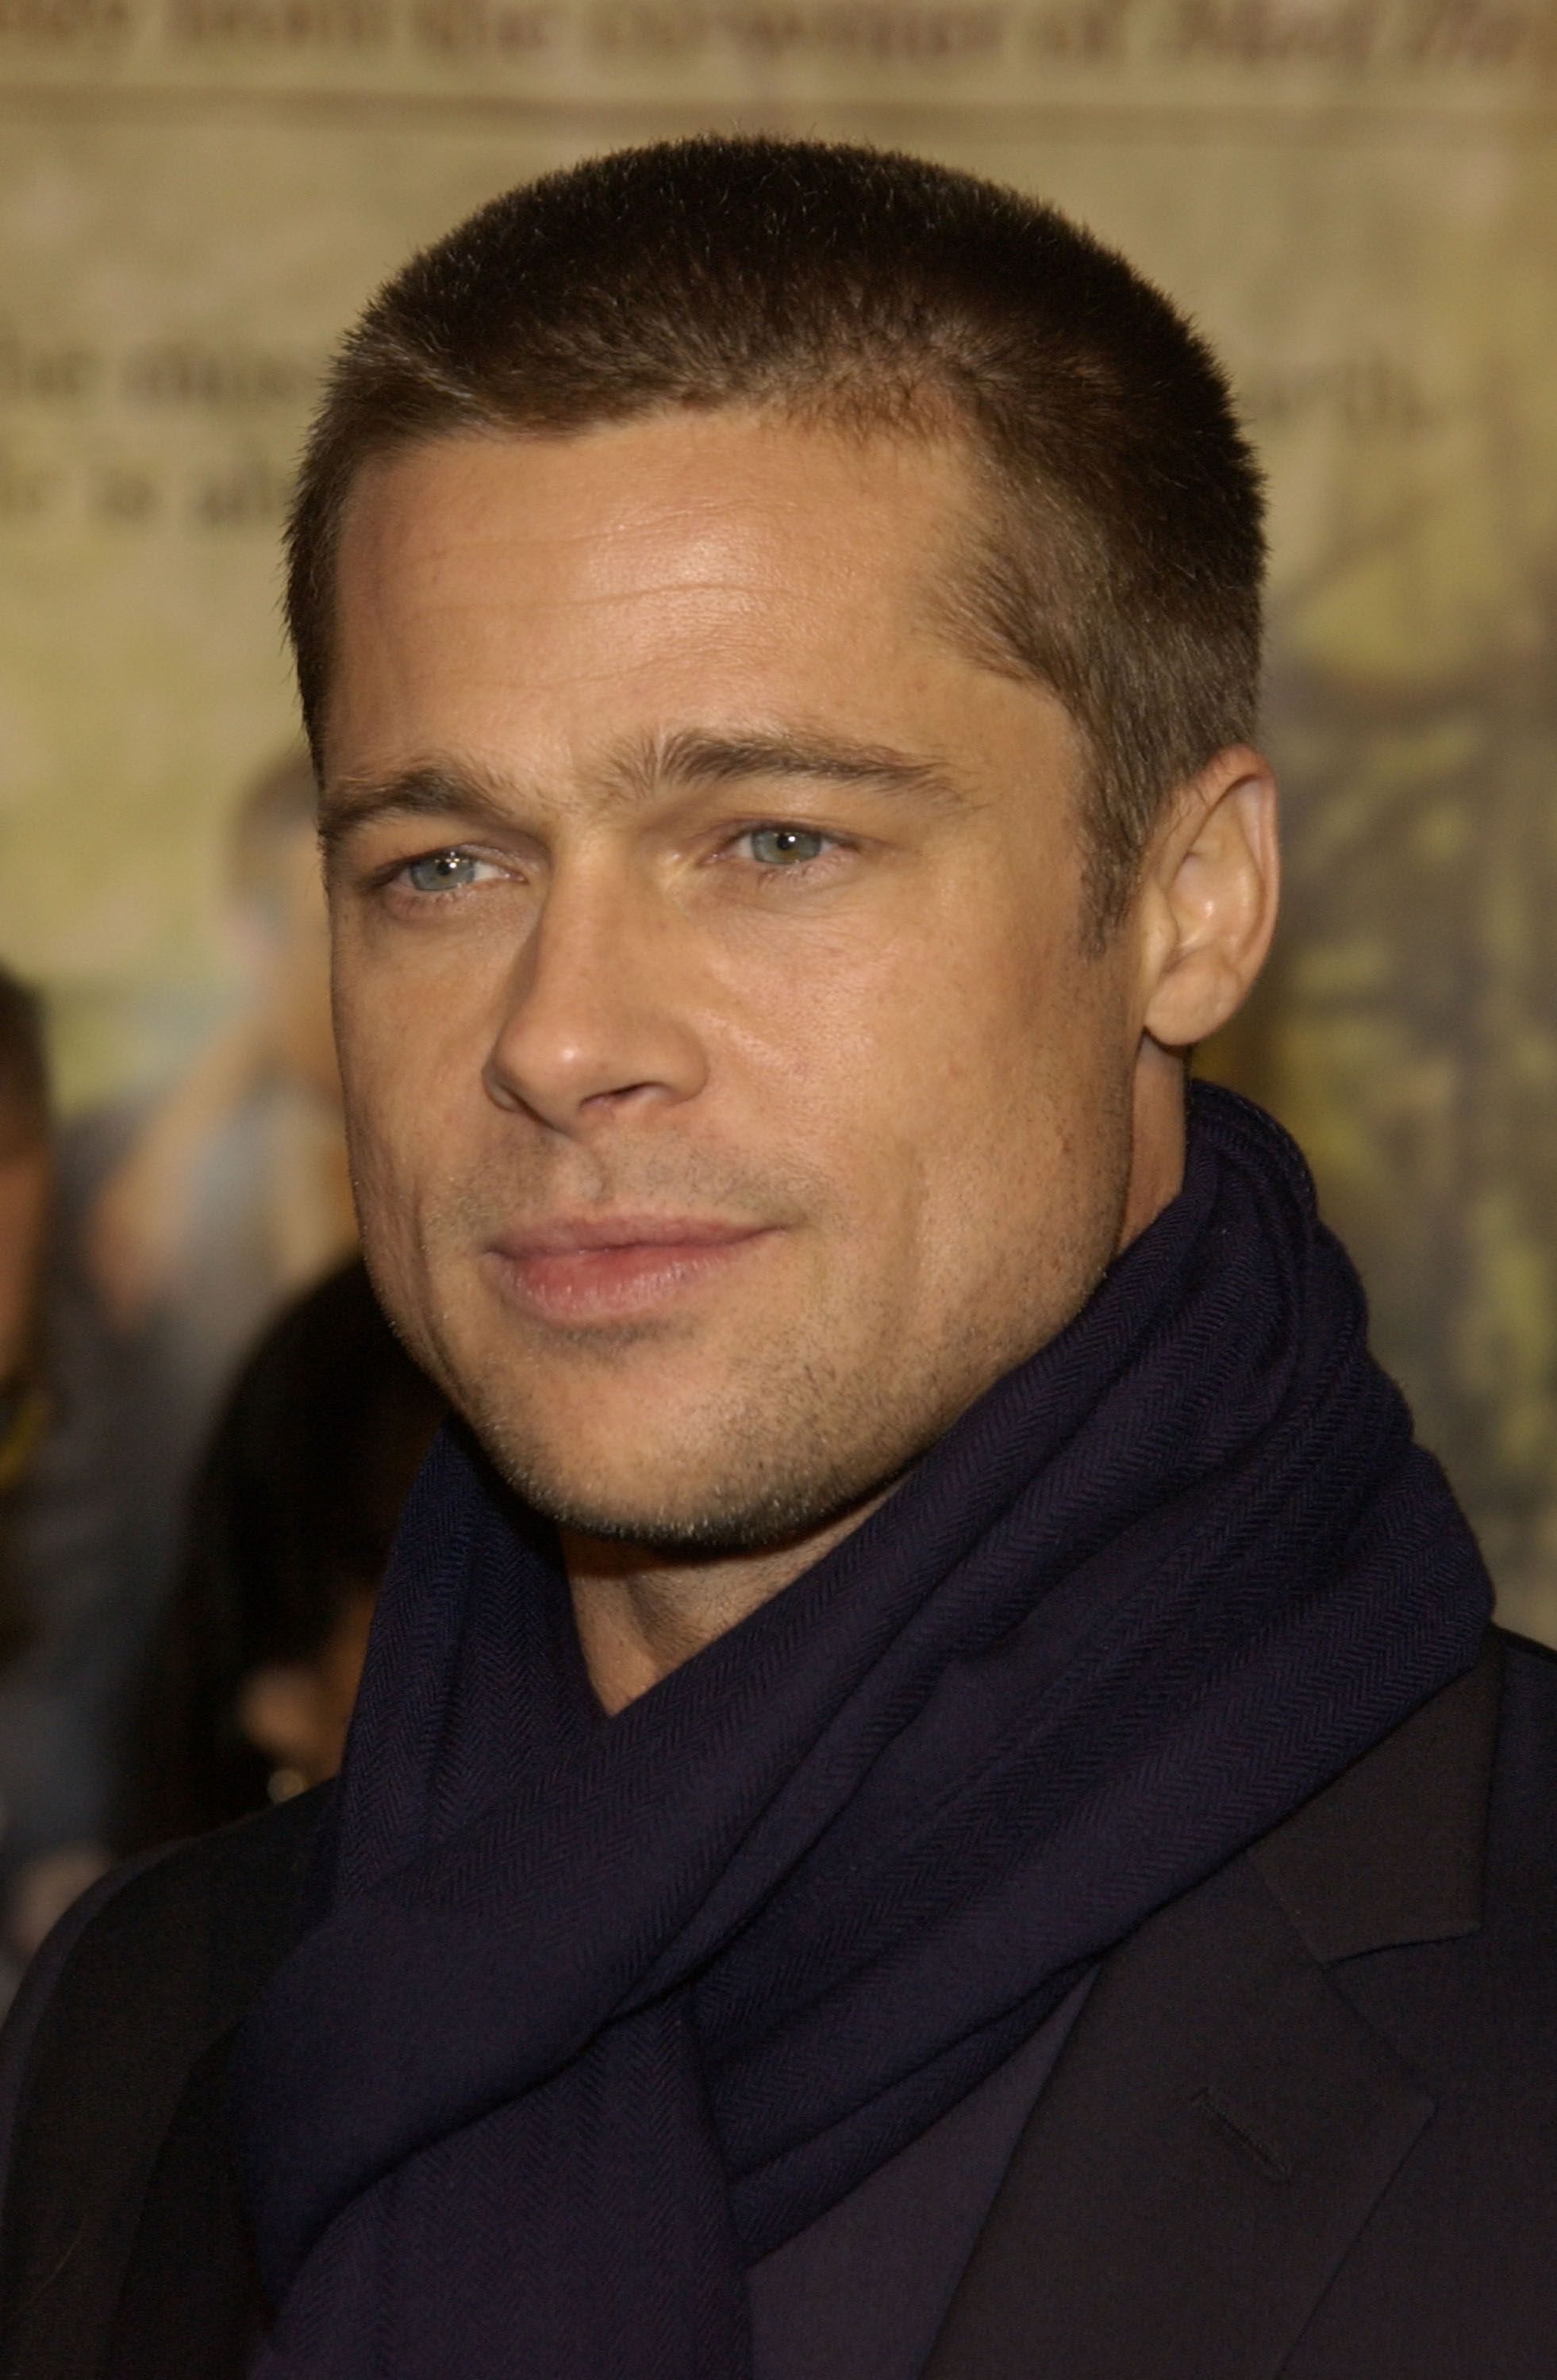 Brad Pitt's Hair Evolution - Photos of Brad Pitt's Hairstyles